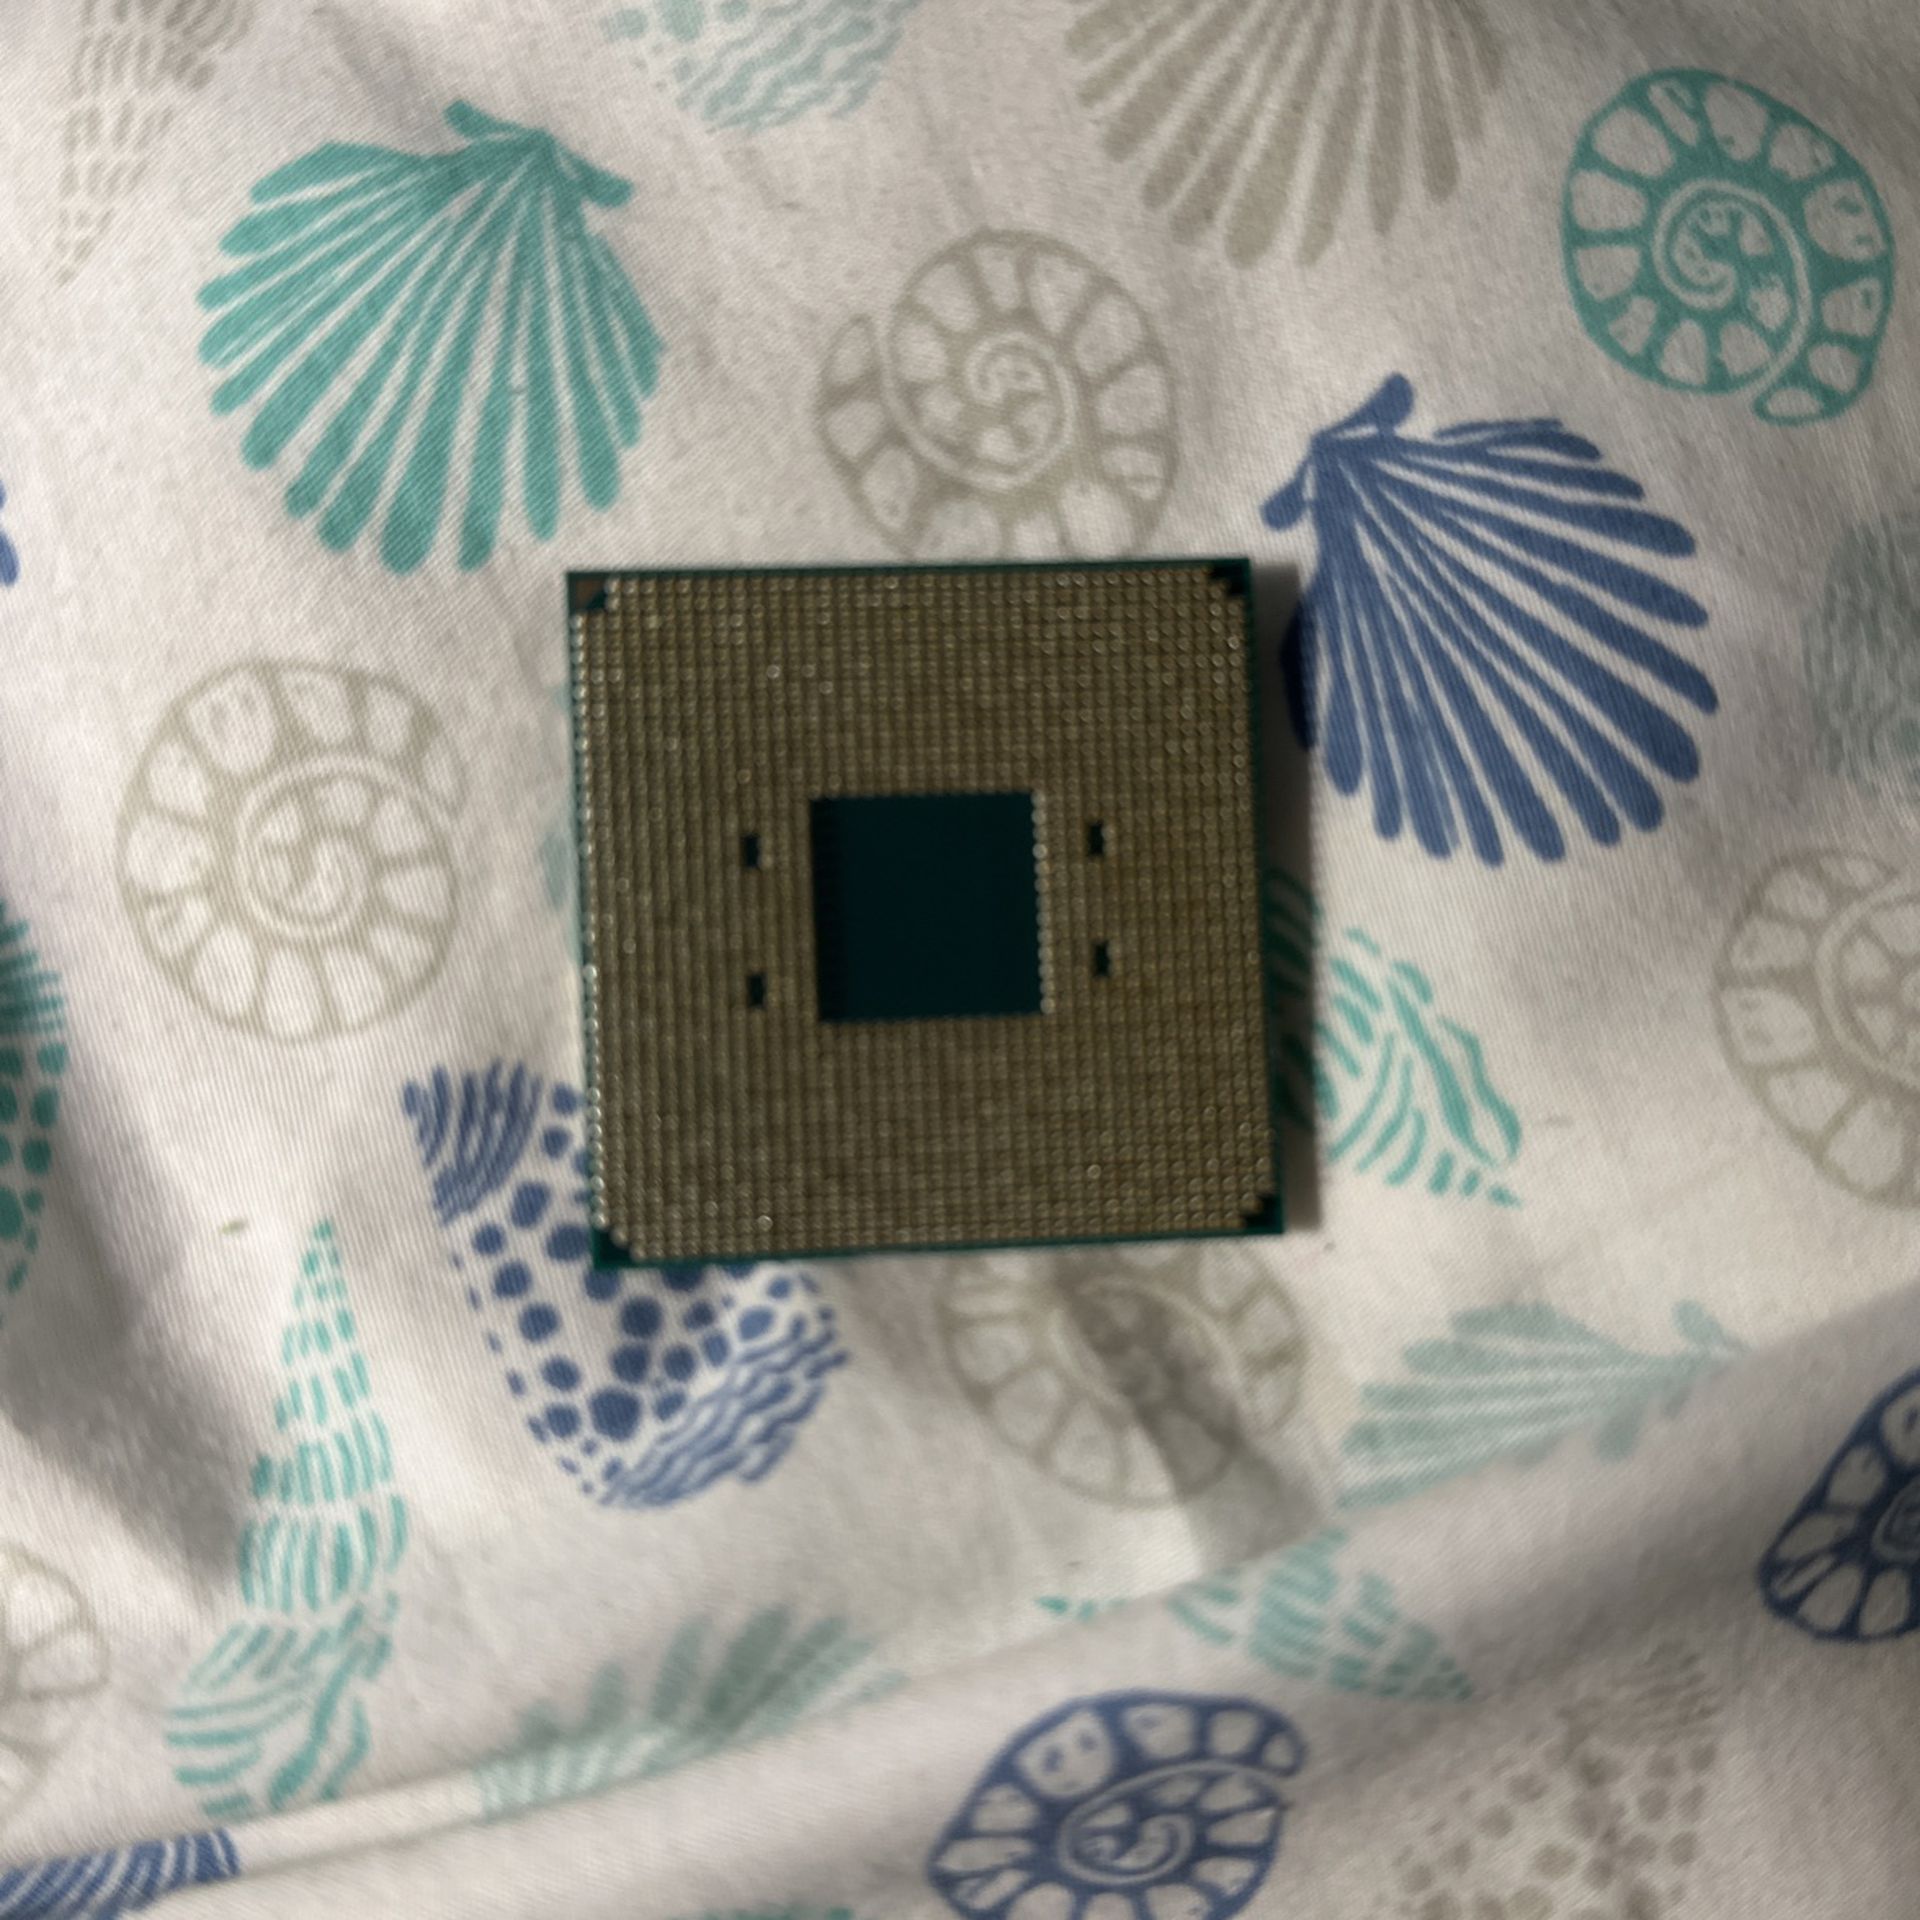 AMD Ryzen  5 3600 Used CPU 3.6 GHz